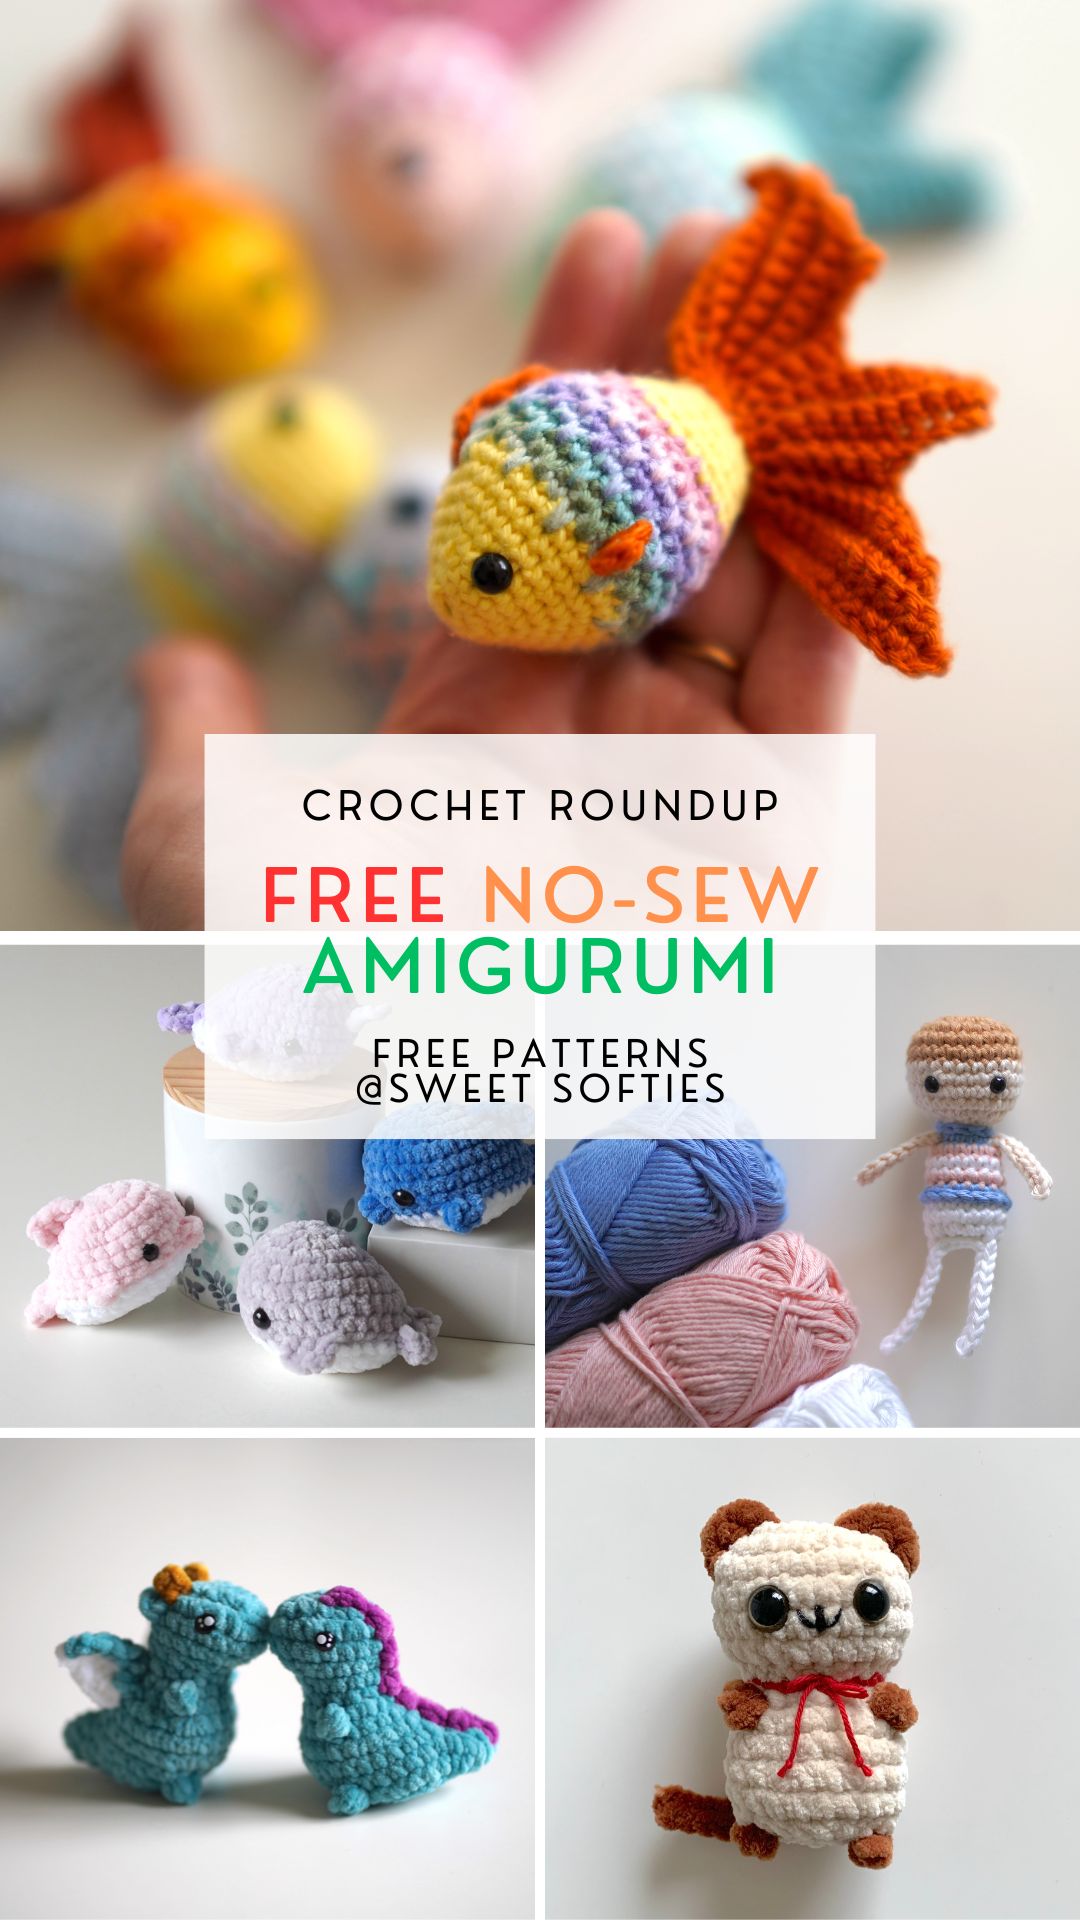 31+ Free No Sew Amigurumi Patterns that You Will Love!